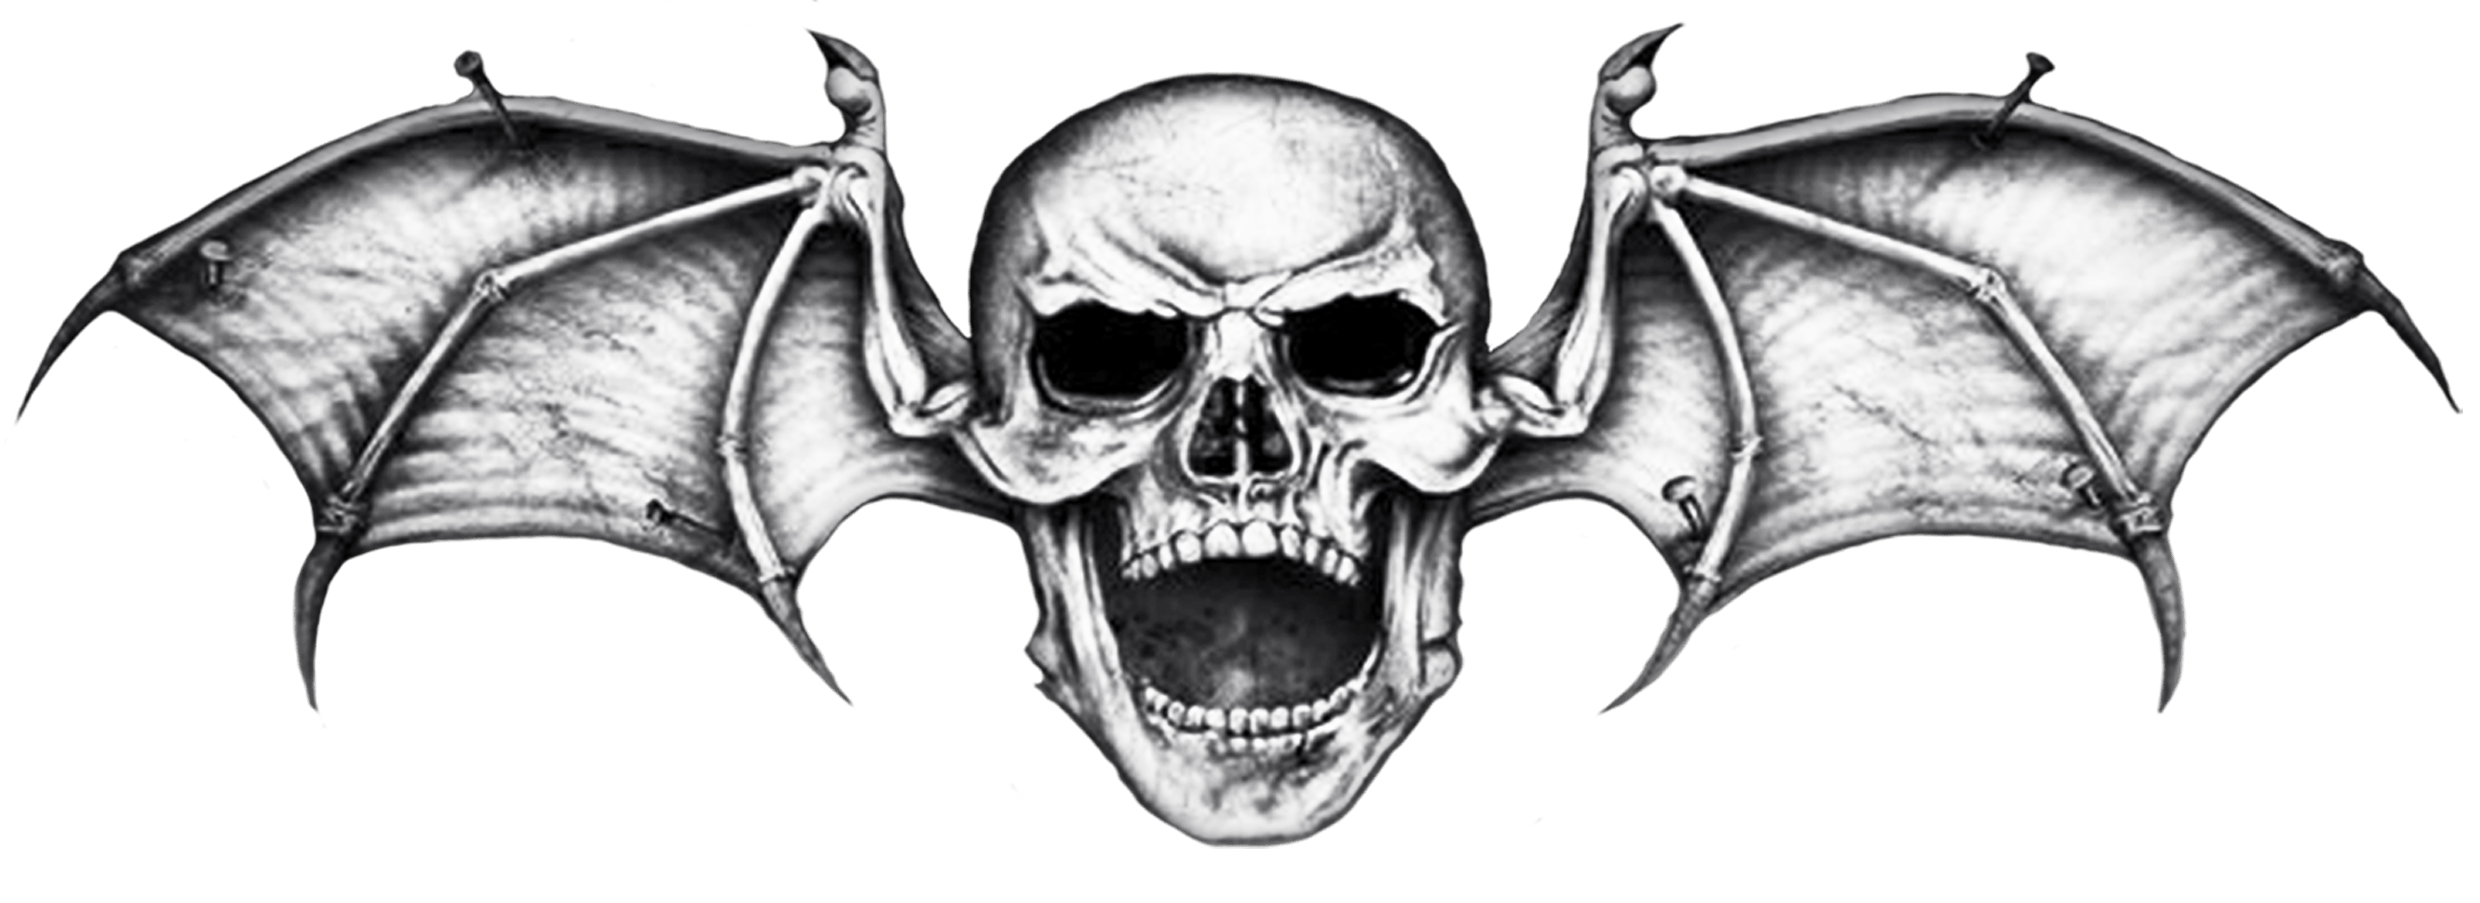 Avenged Sevenfold Logo “Deathbat” Tattoo By Lightsinaugust